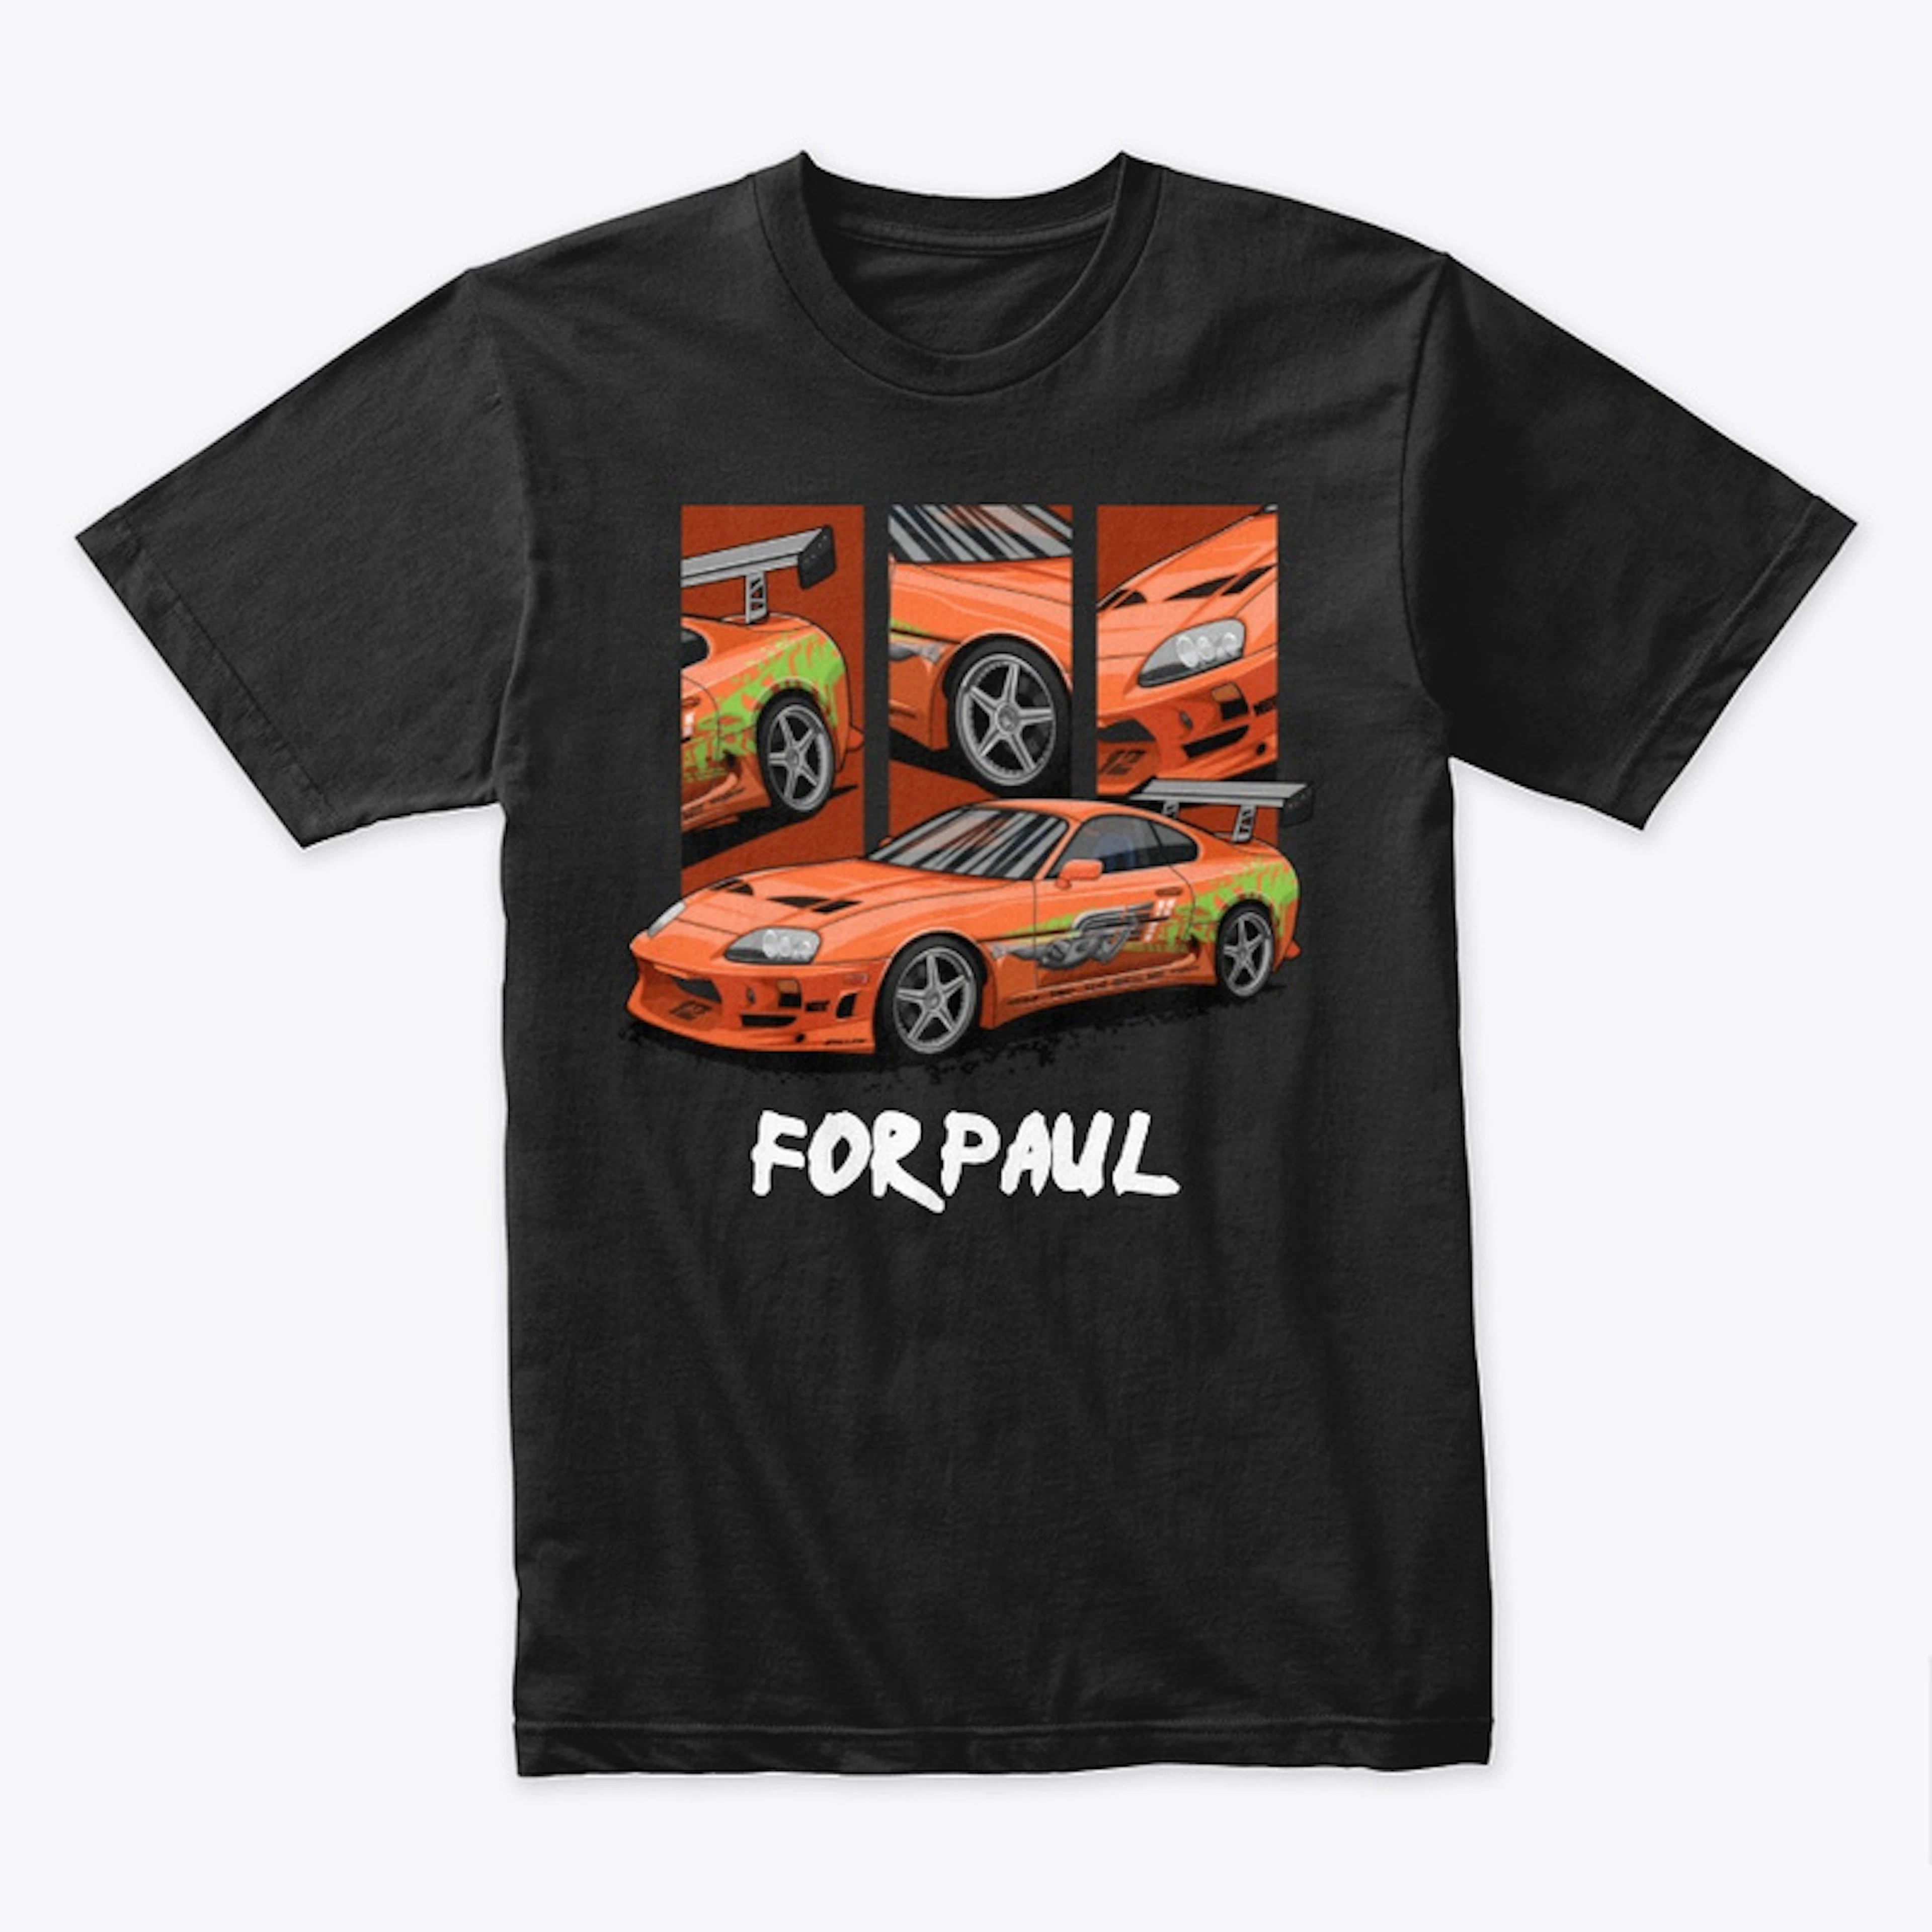 'For Paul" T-Shirt